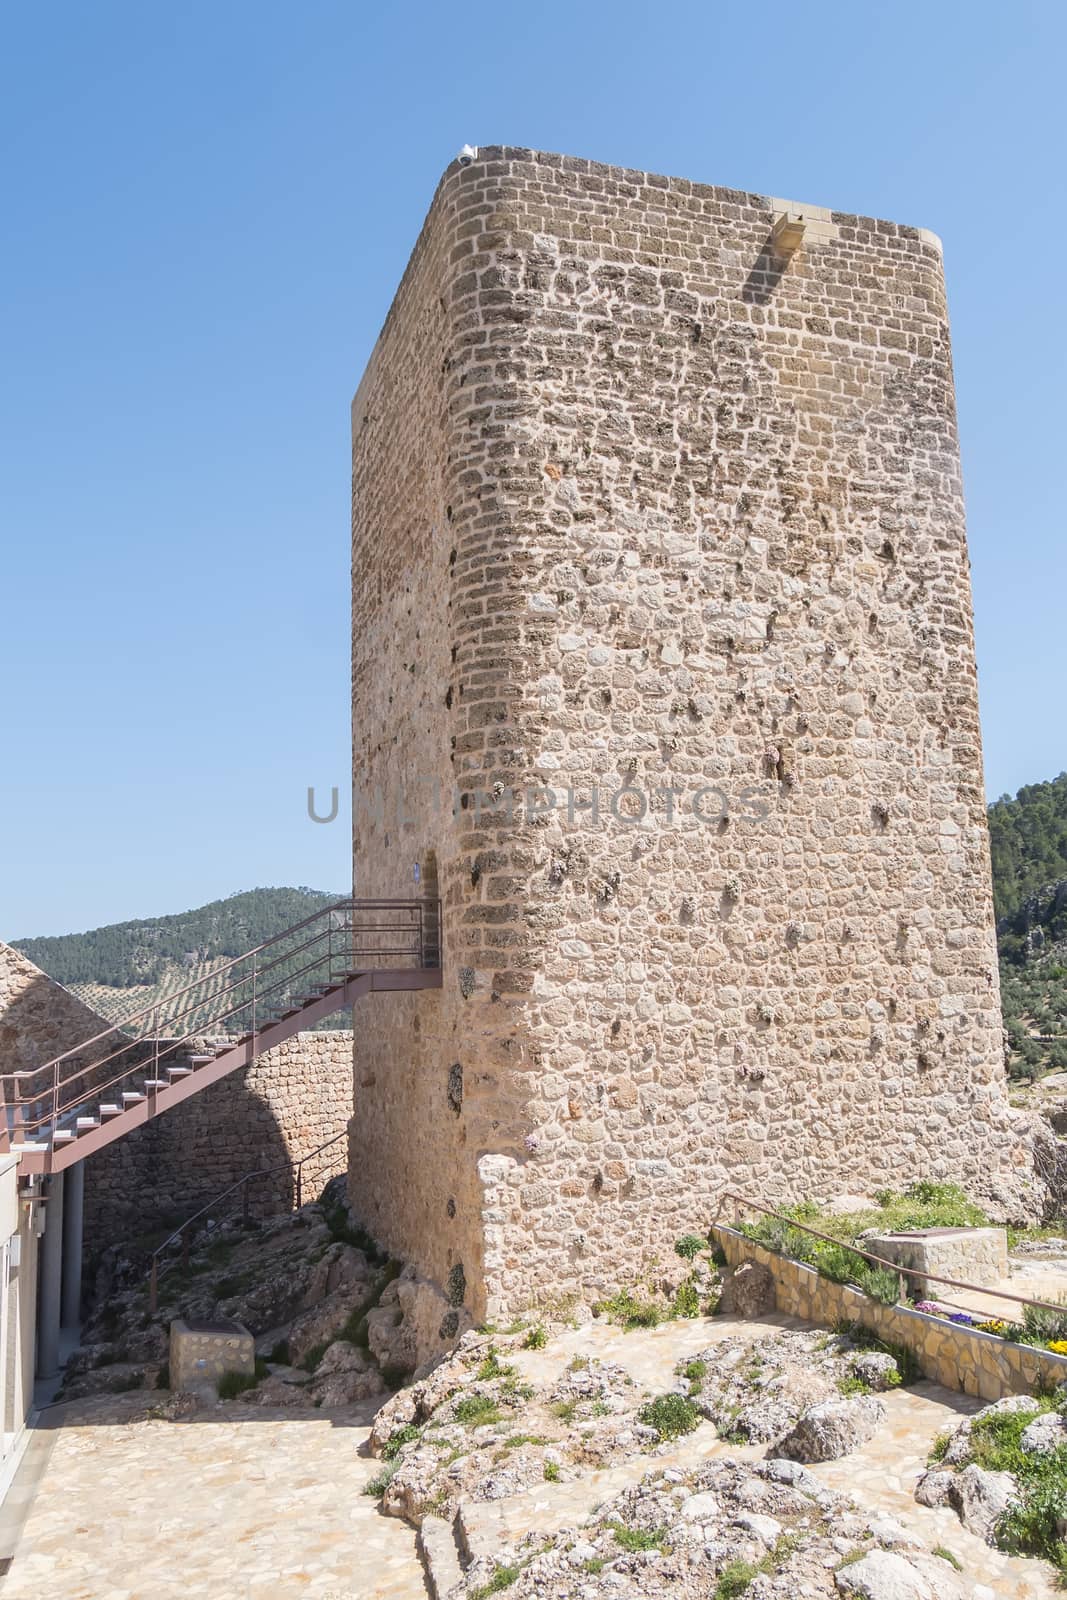 Hornos de segura castle, Cosmonarium, Jaen, Spain